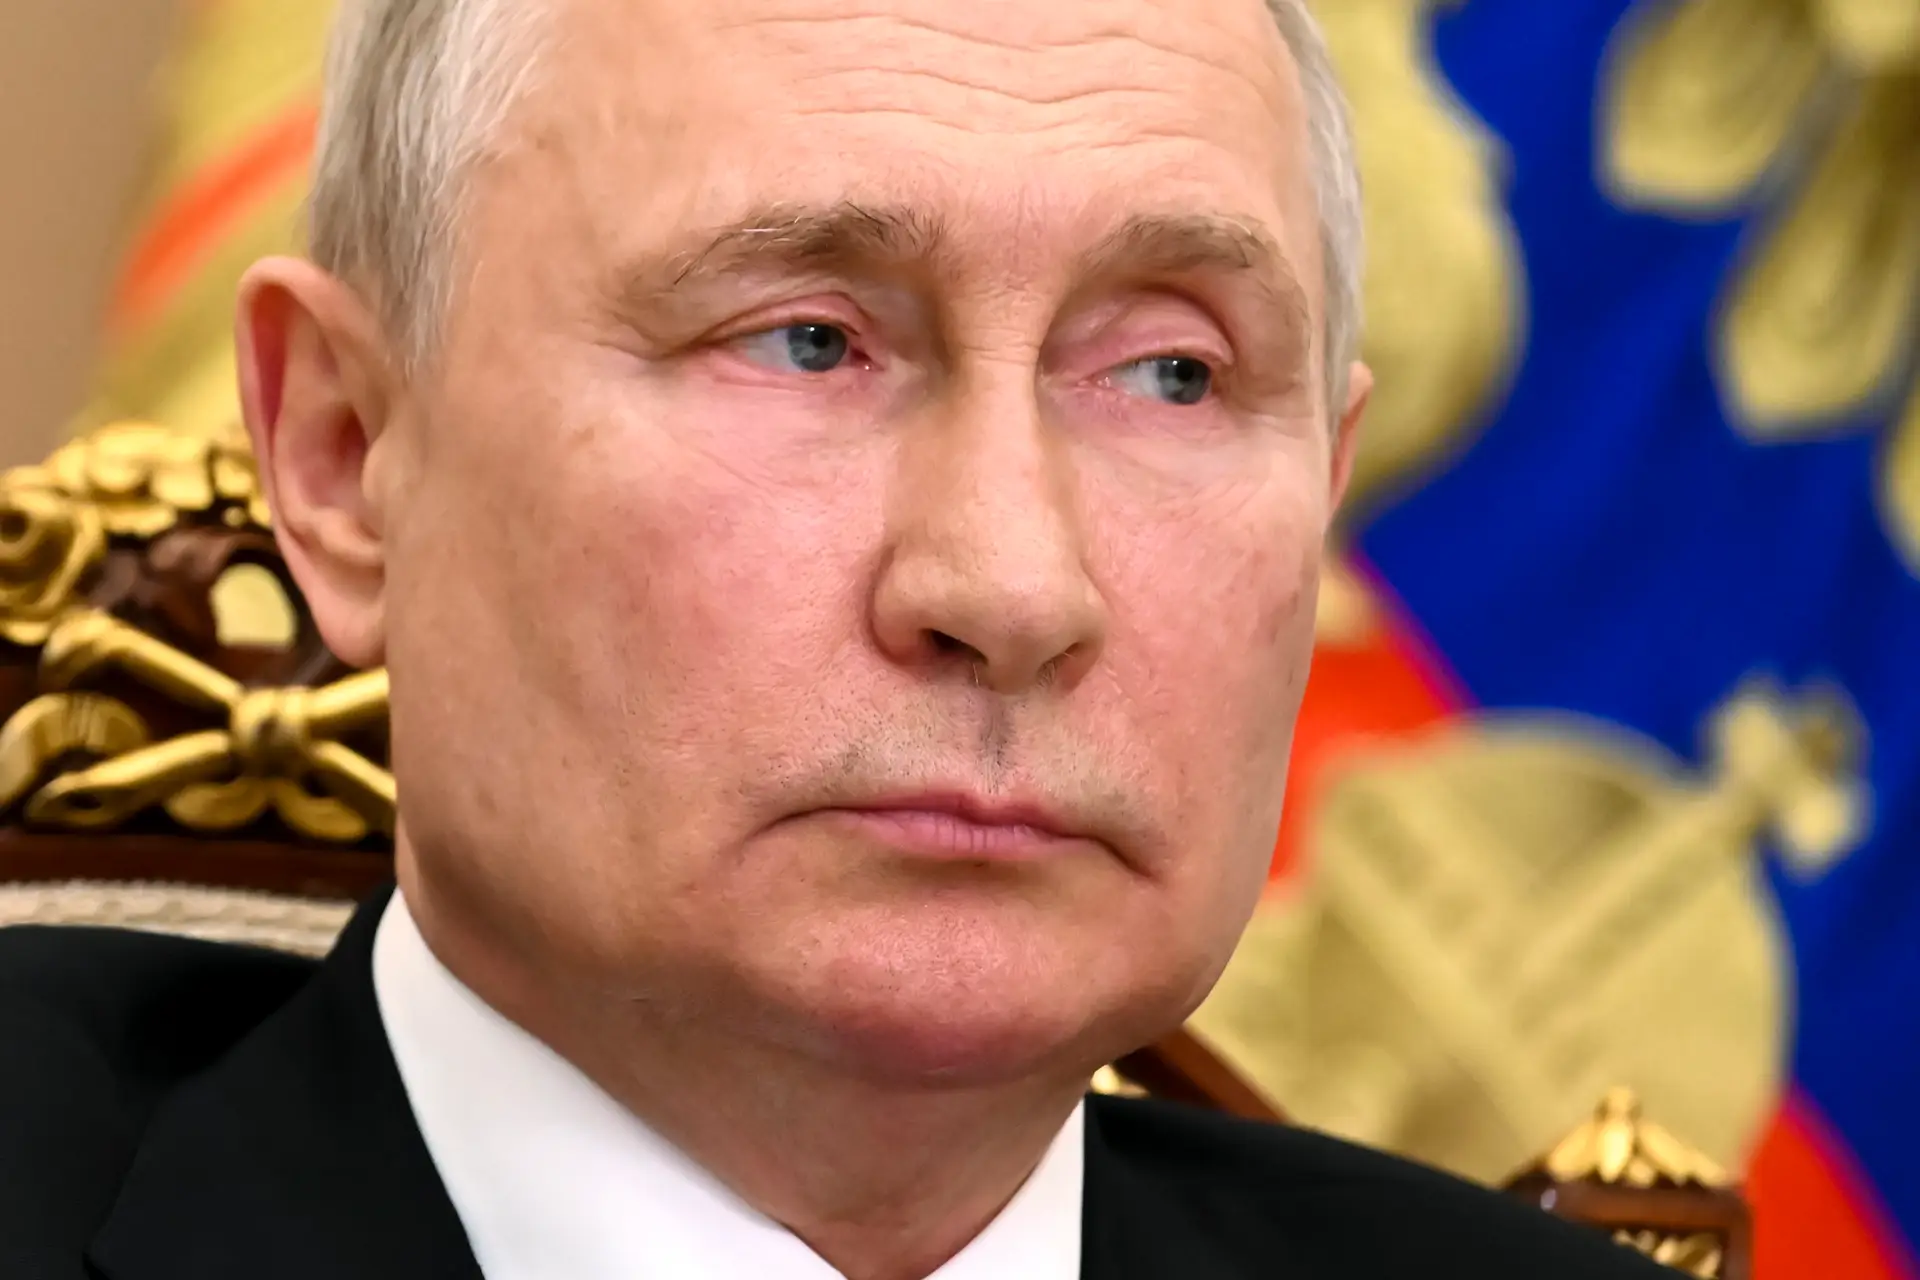 Rússia: como funciona o país de Vladimir Putin?